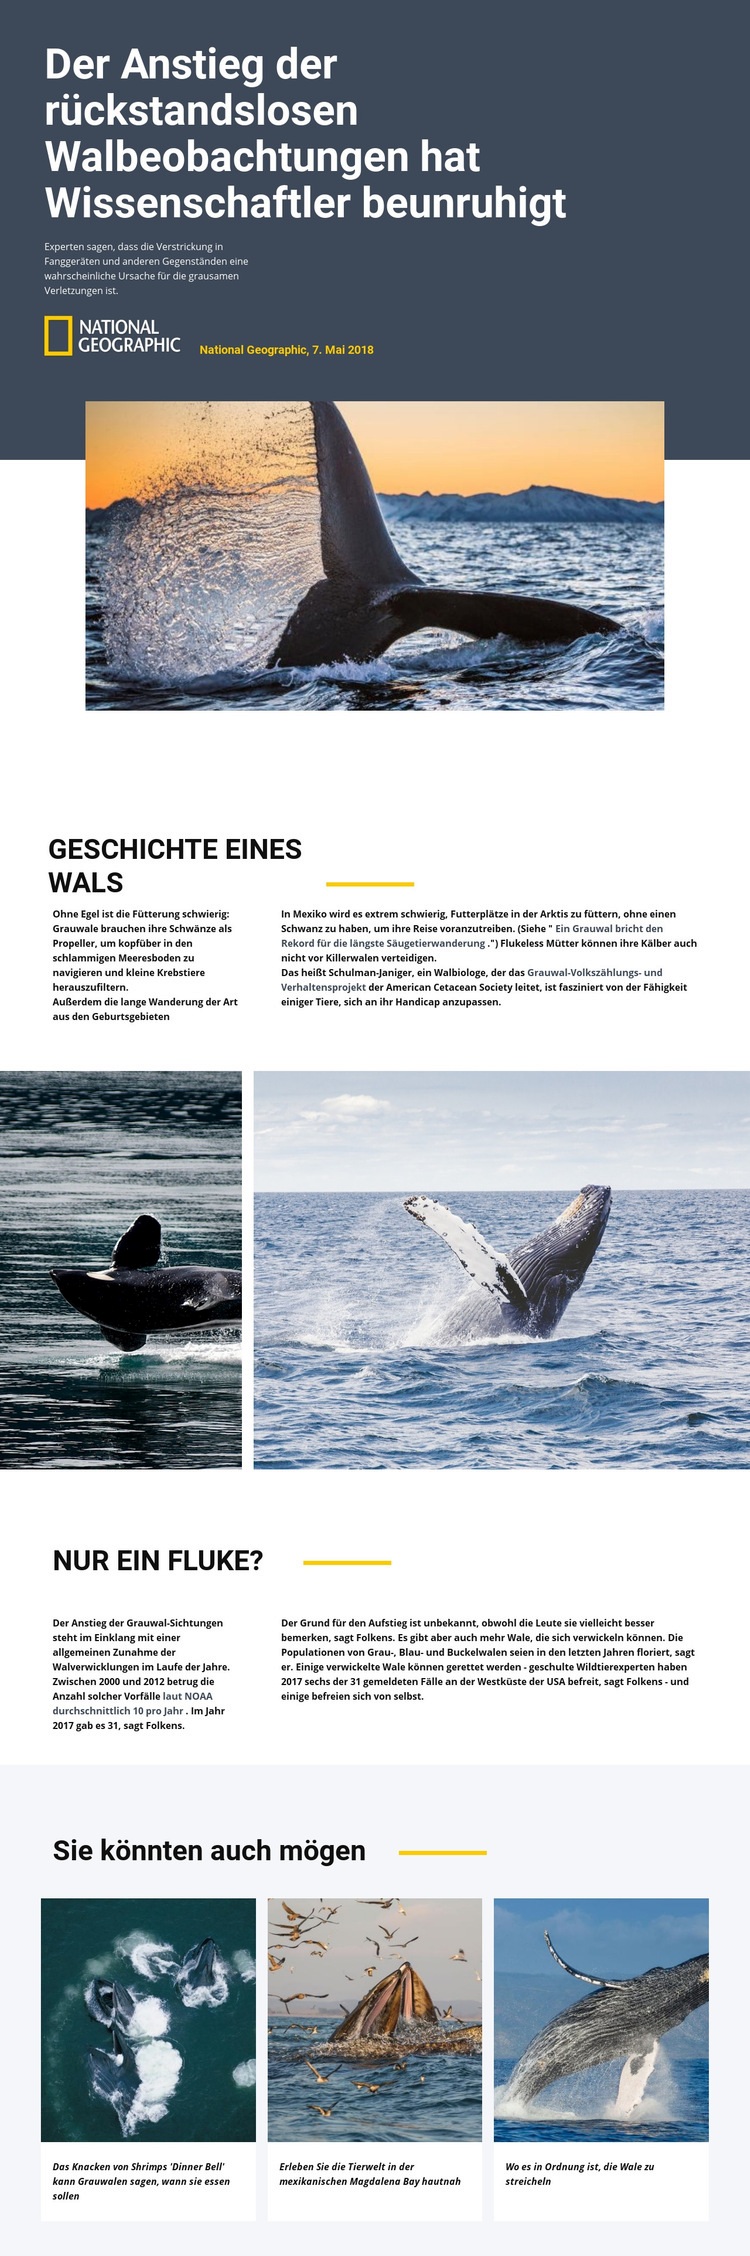 Walbeobachtungszentrum Website design